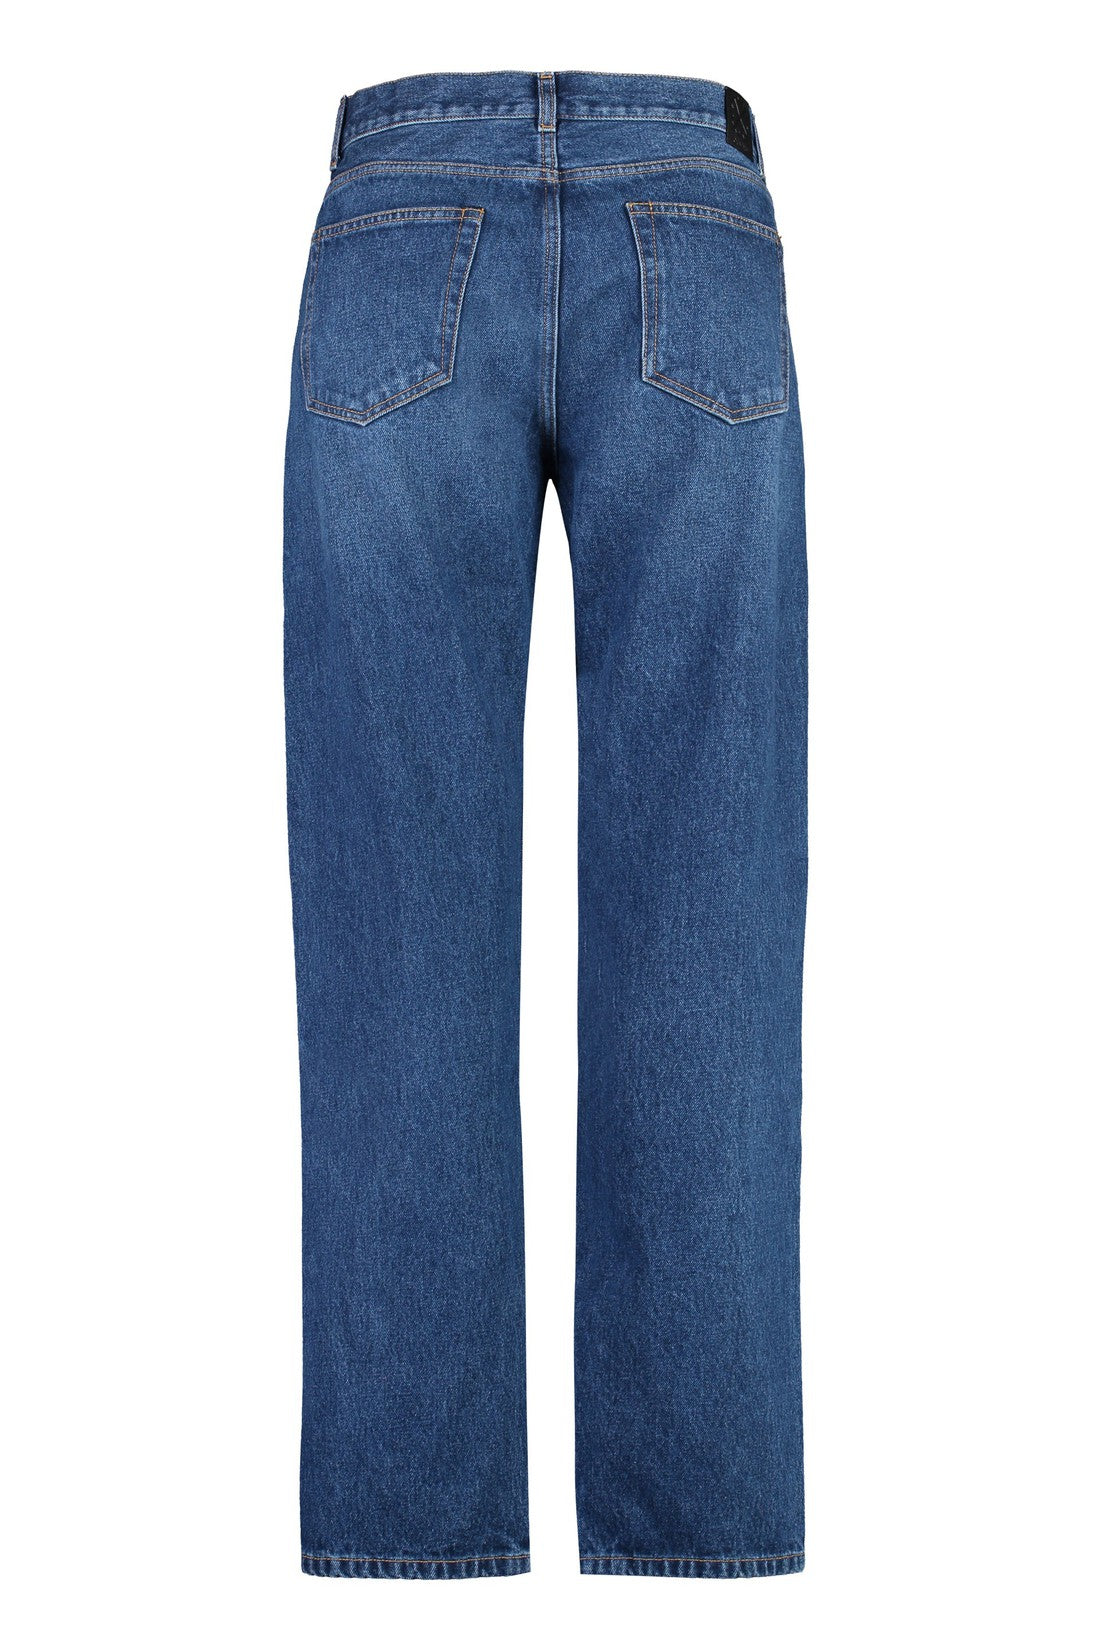 Off-White-OUTLET-SALE-5-pocket straight-leg jeans-ARCHIVIST